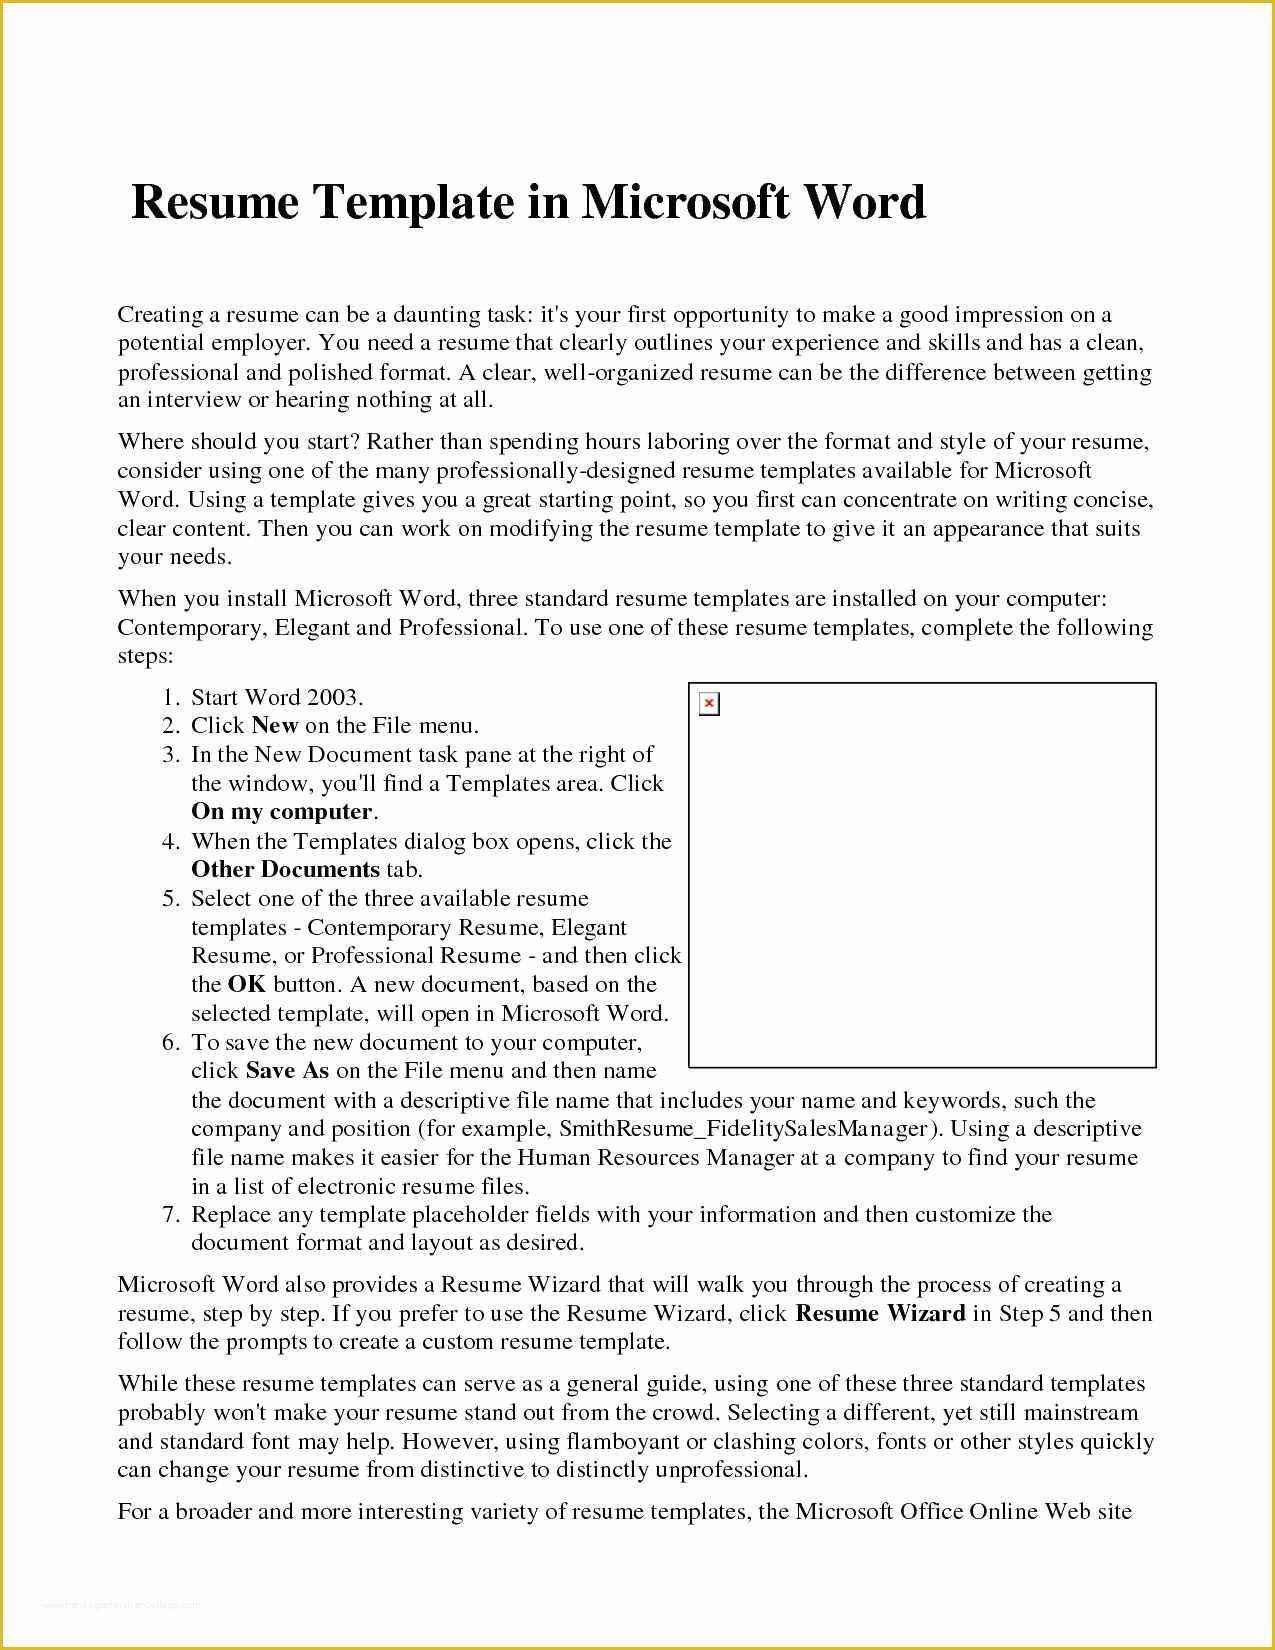 Free Resume Templates Microsoft Word 2007 Of Microsoft Word Resume Templates 2007 Best Free